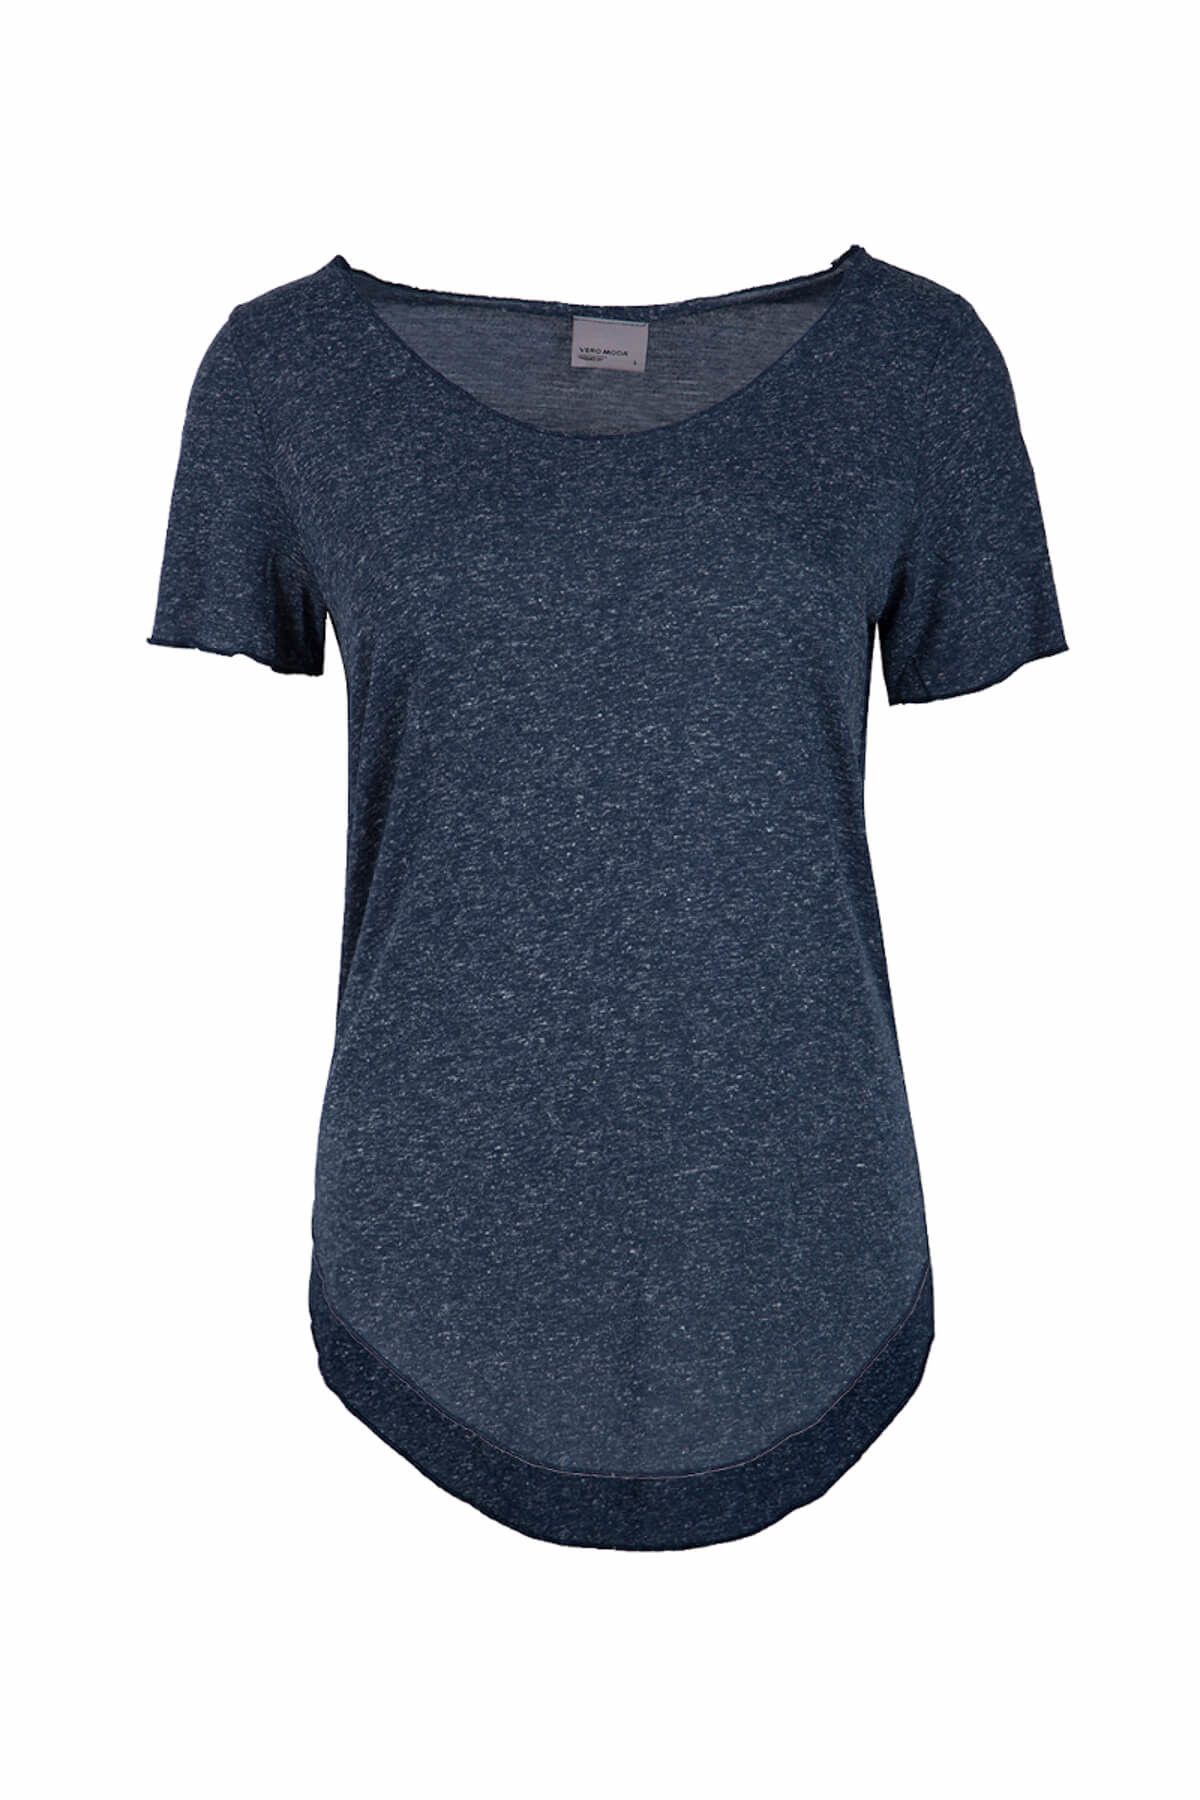 Vero Moda Kadın Lacivert T-Shirt 10149900